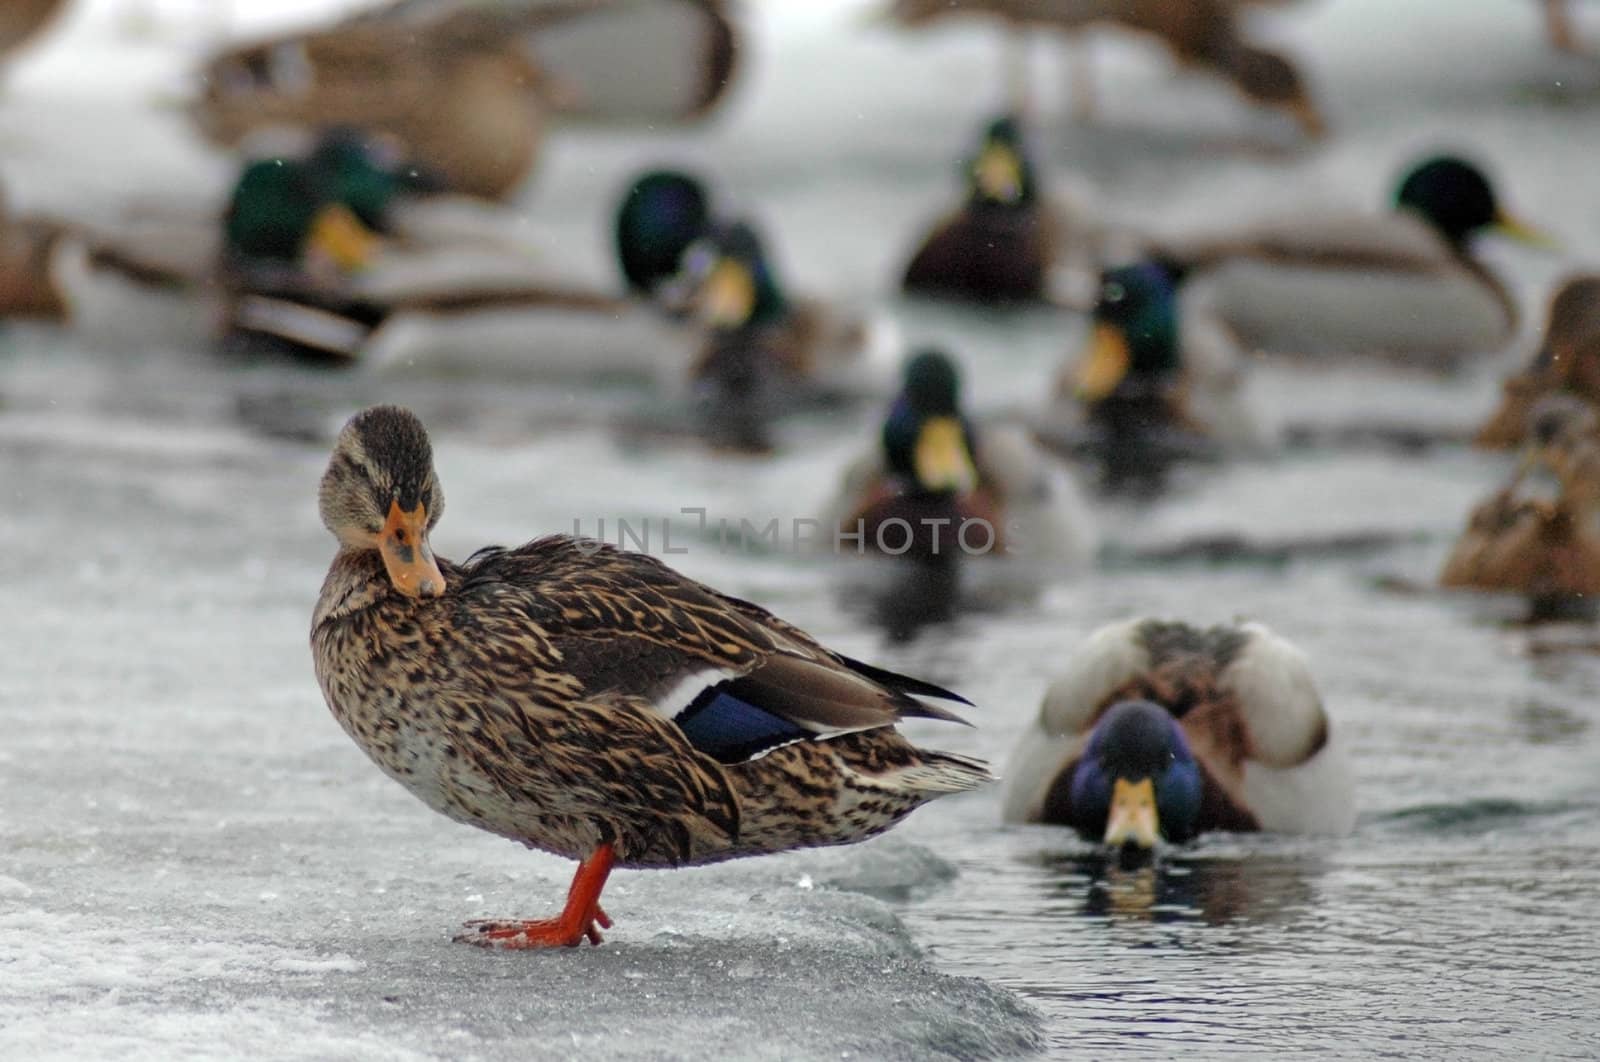 ducks swimming in frozen pond, one duck standing on ice